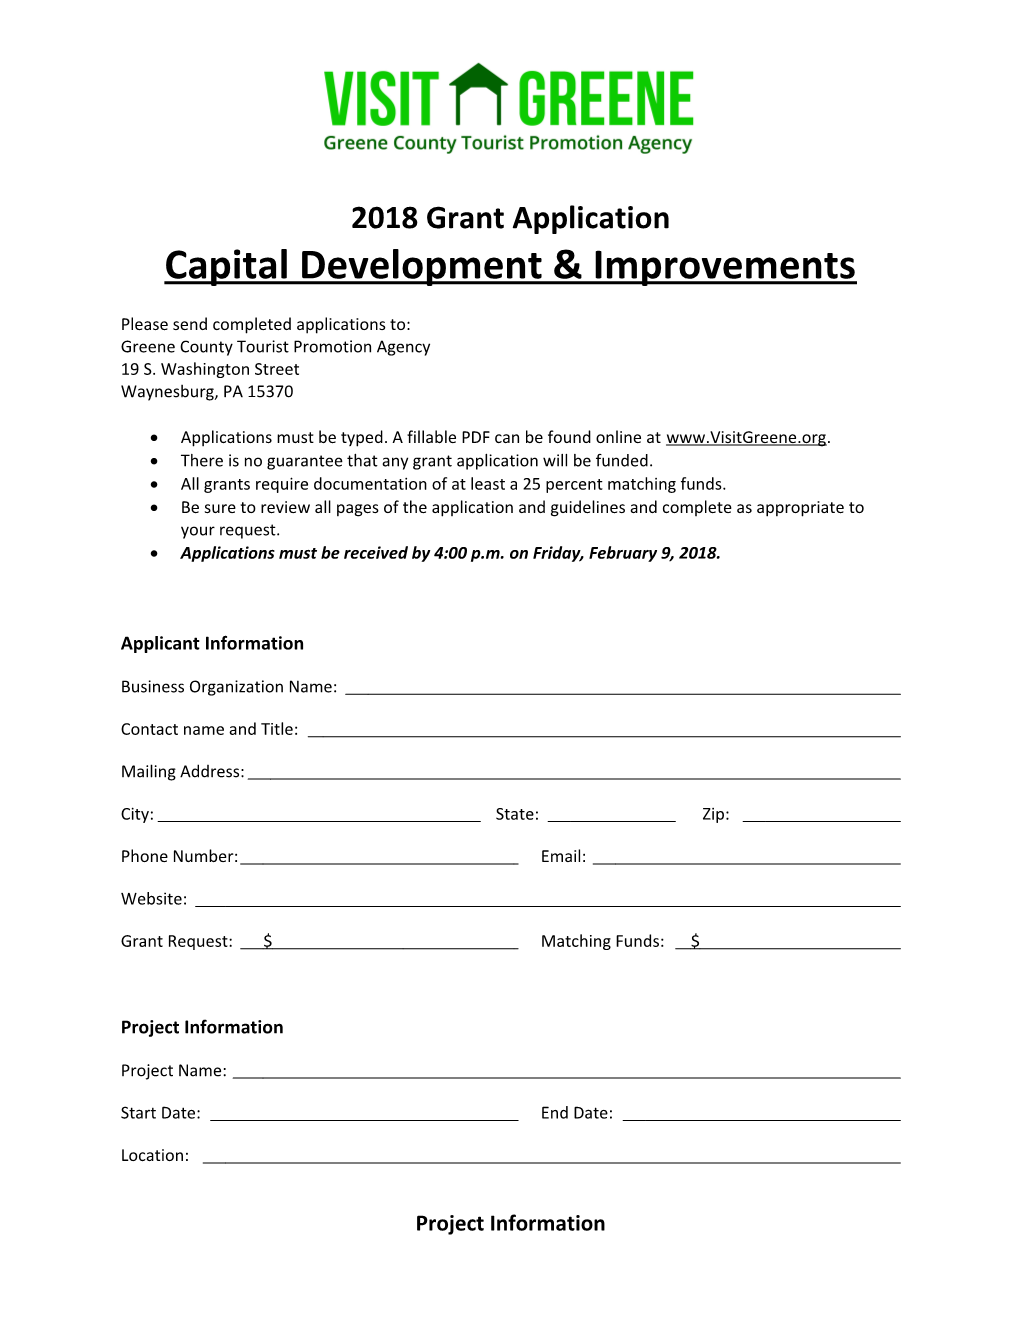 Greene County Tourist Promotion Agency2018 Capital Developmentimprovements Grant